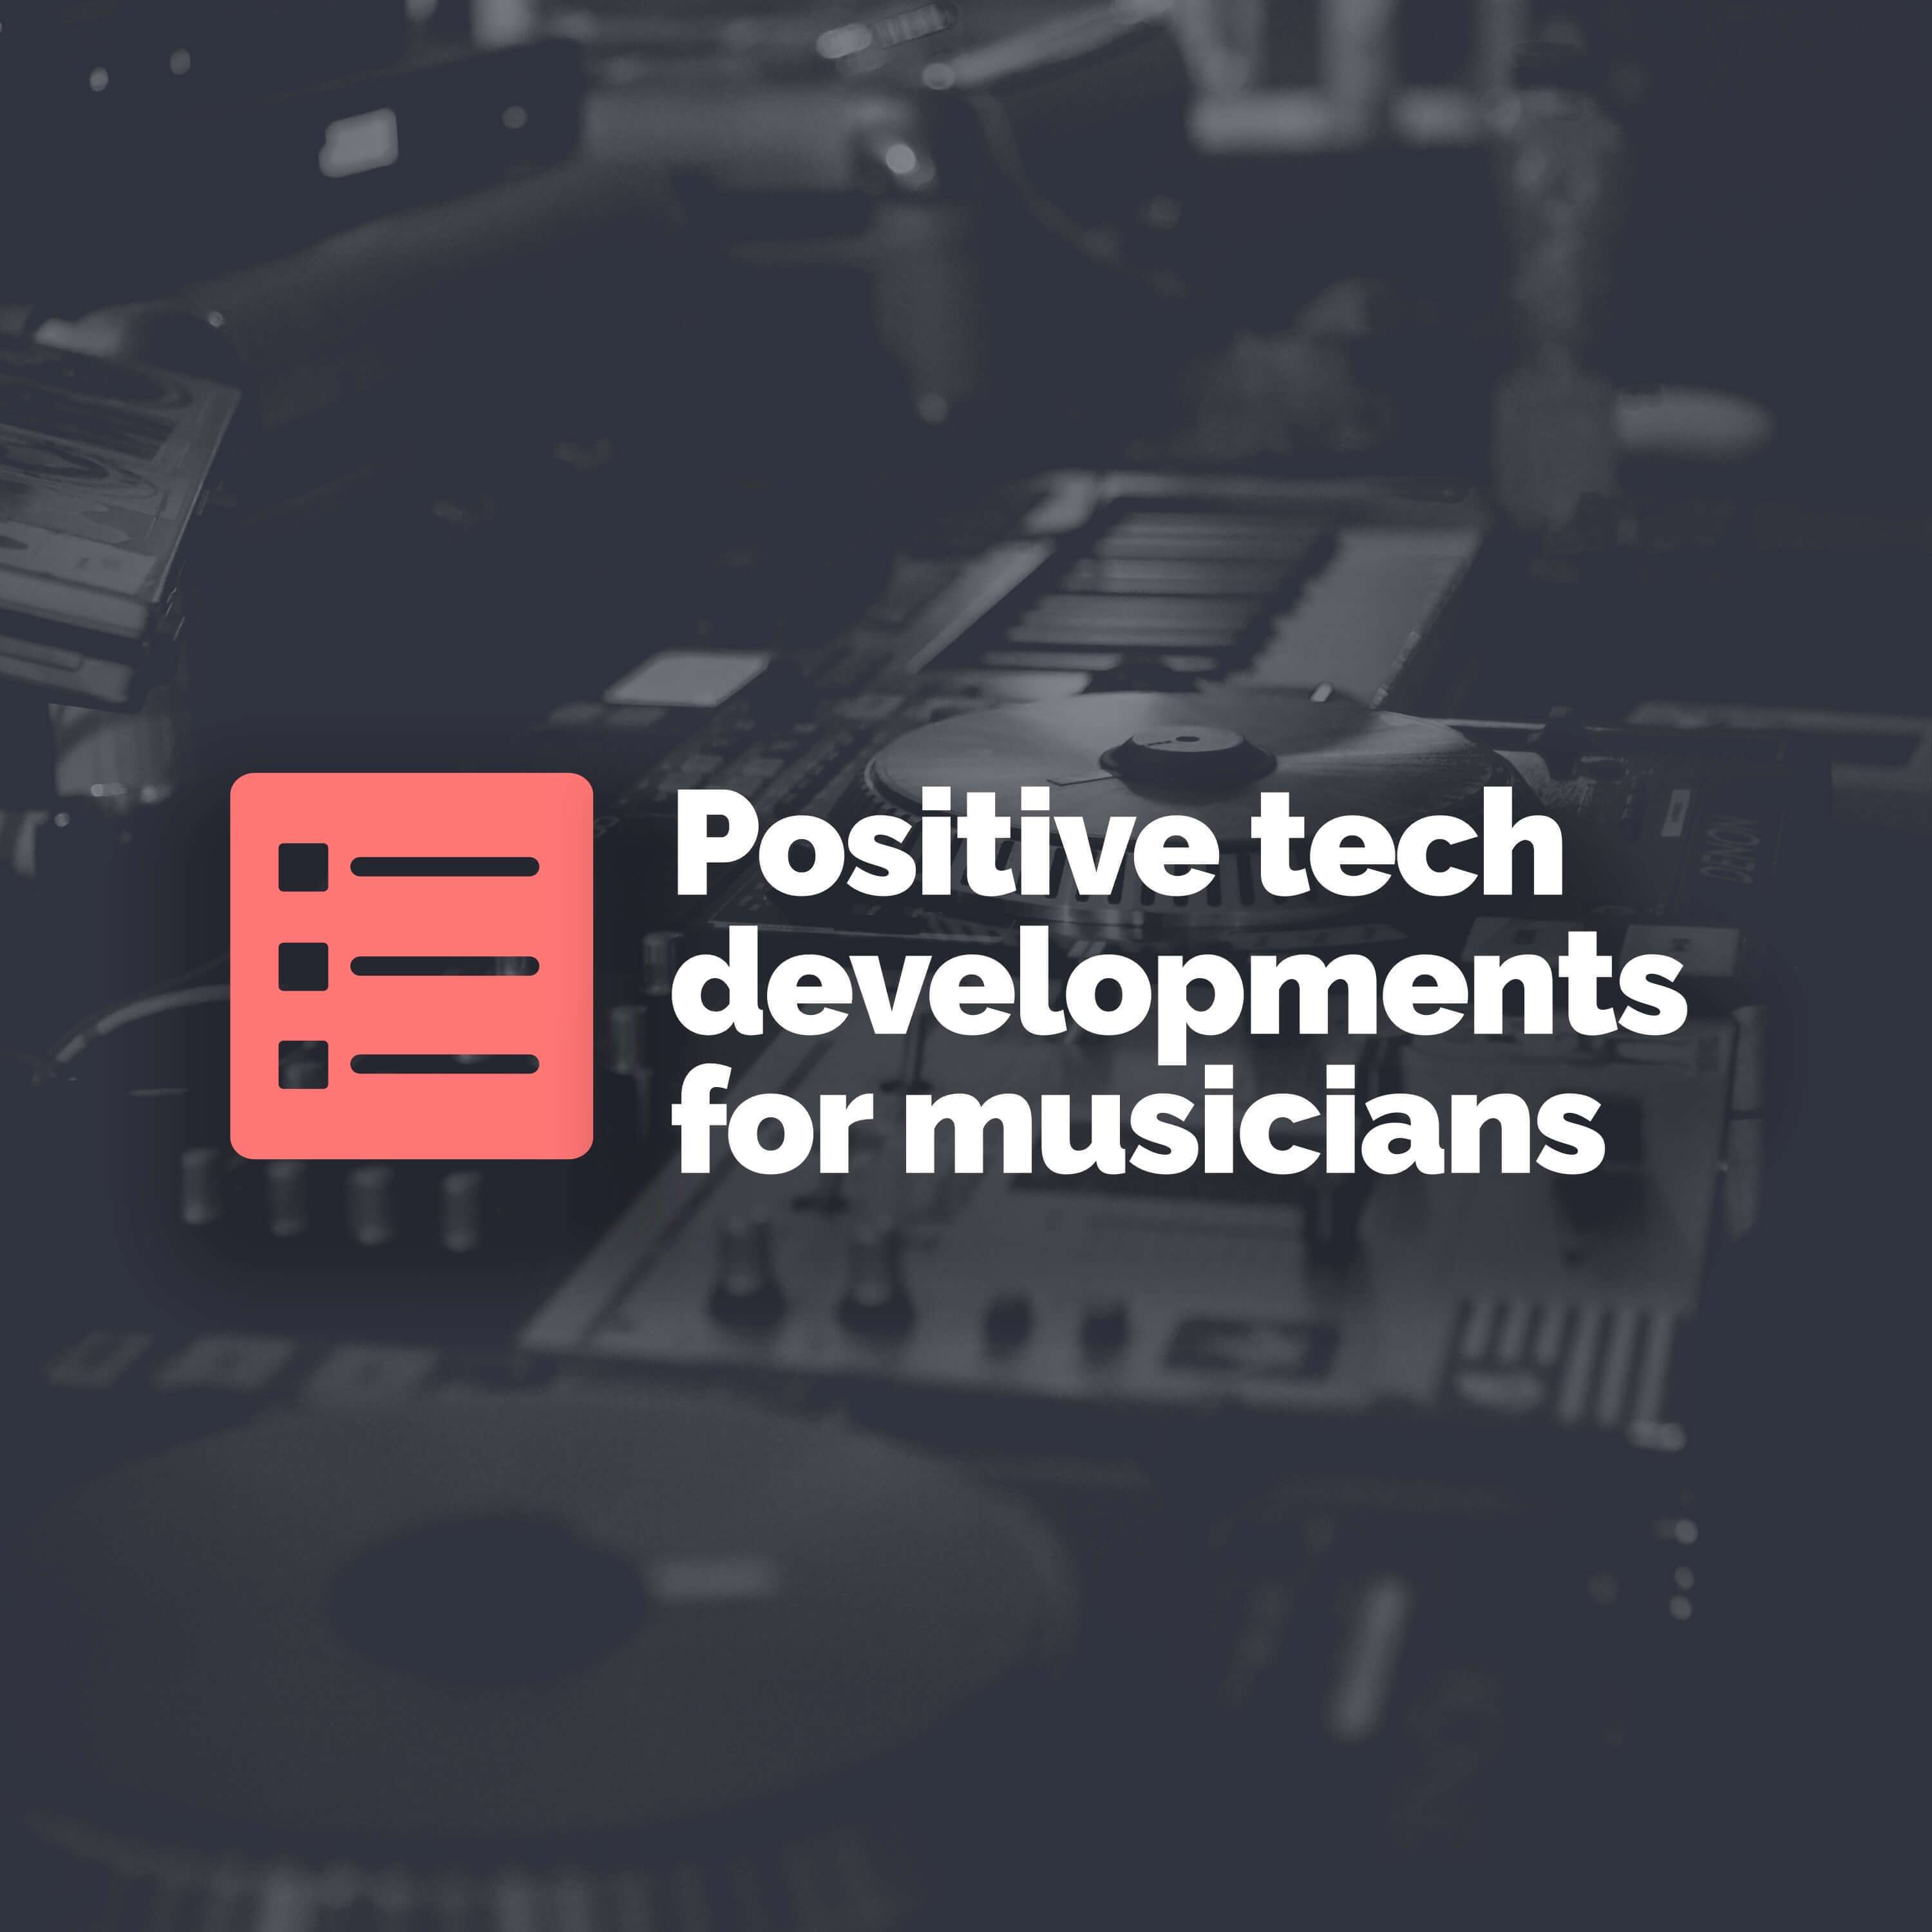 Top 5 positive tech developments for musicians